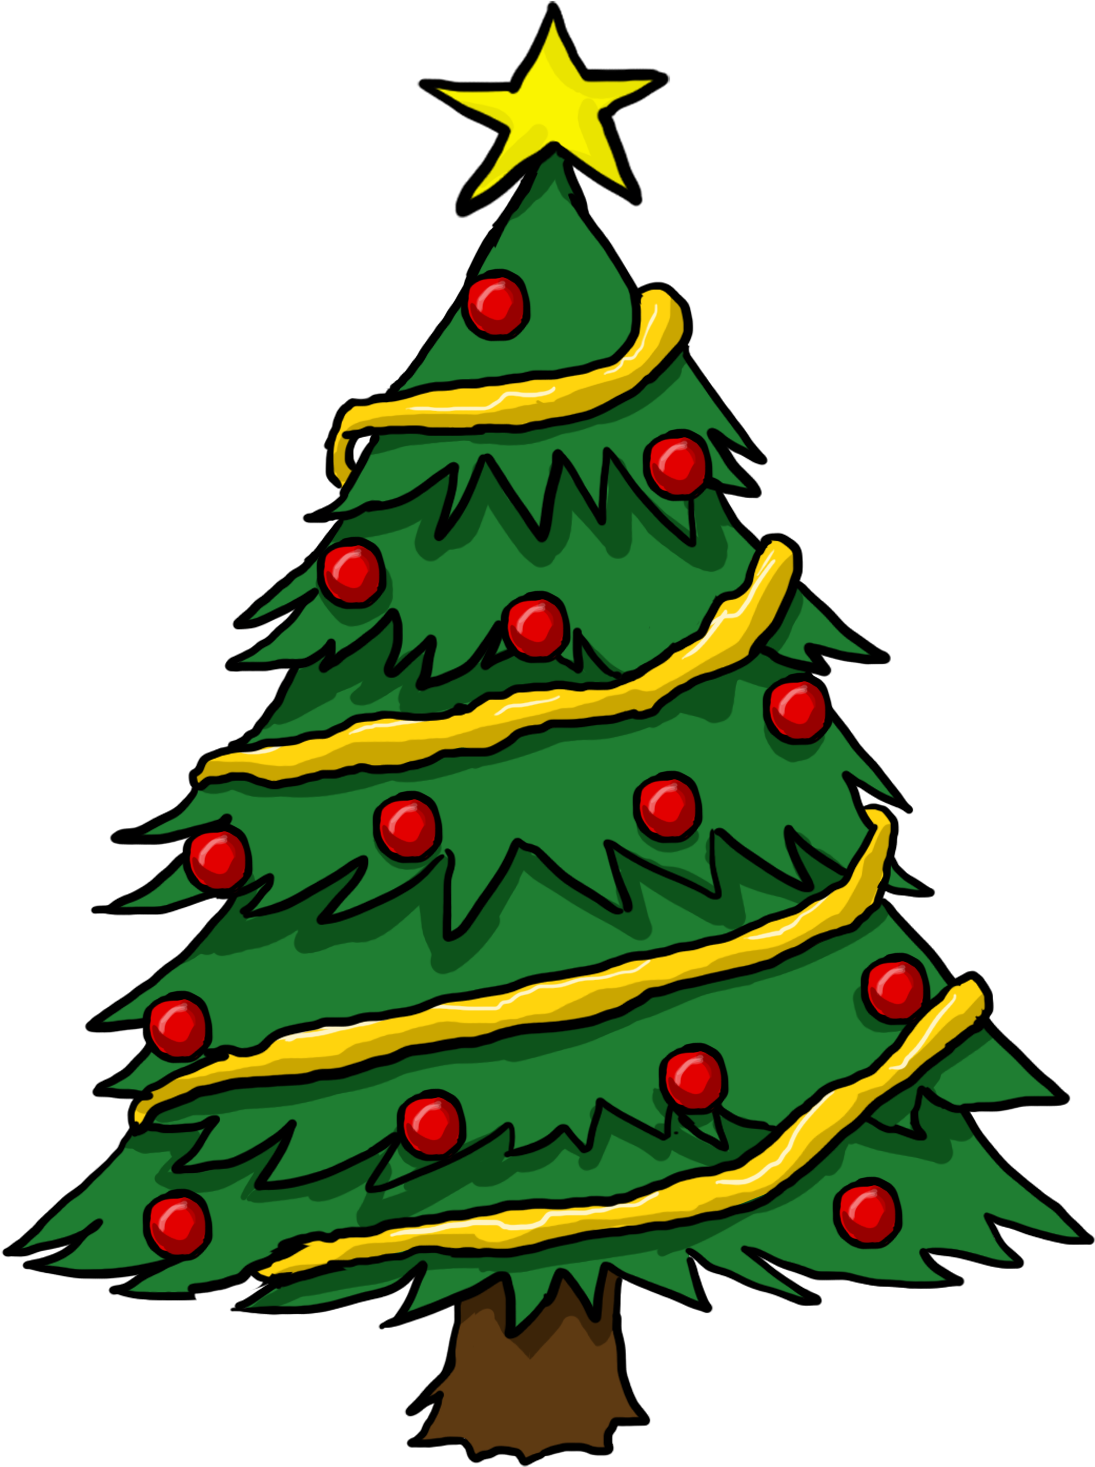 Free To Use Public Domain Christmas Tree Clip Art.